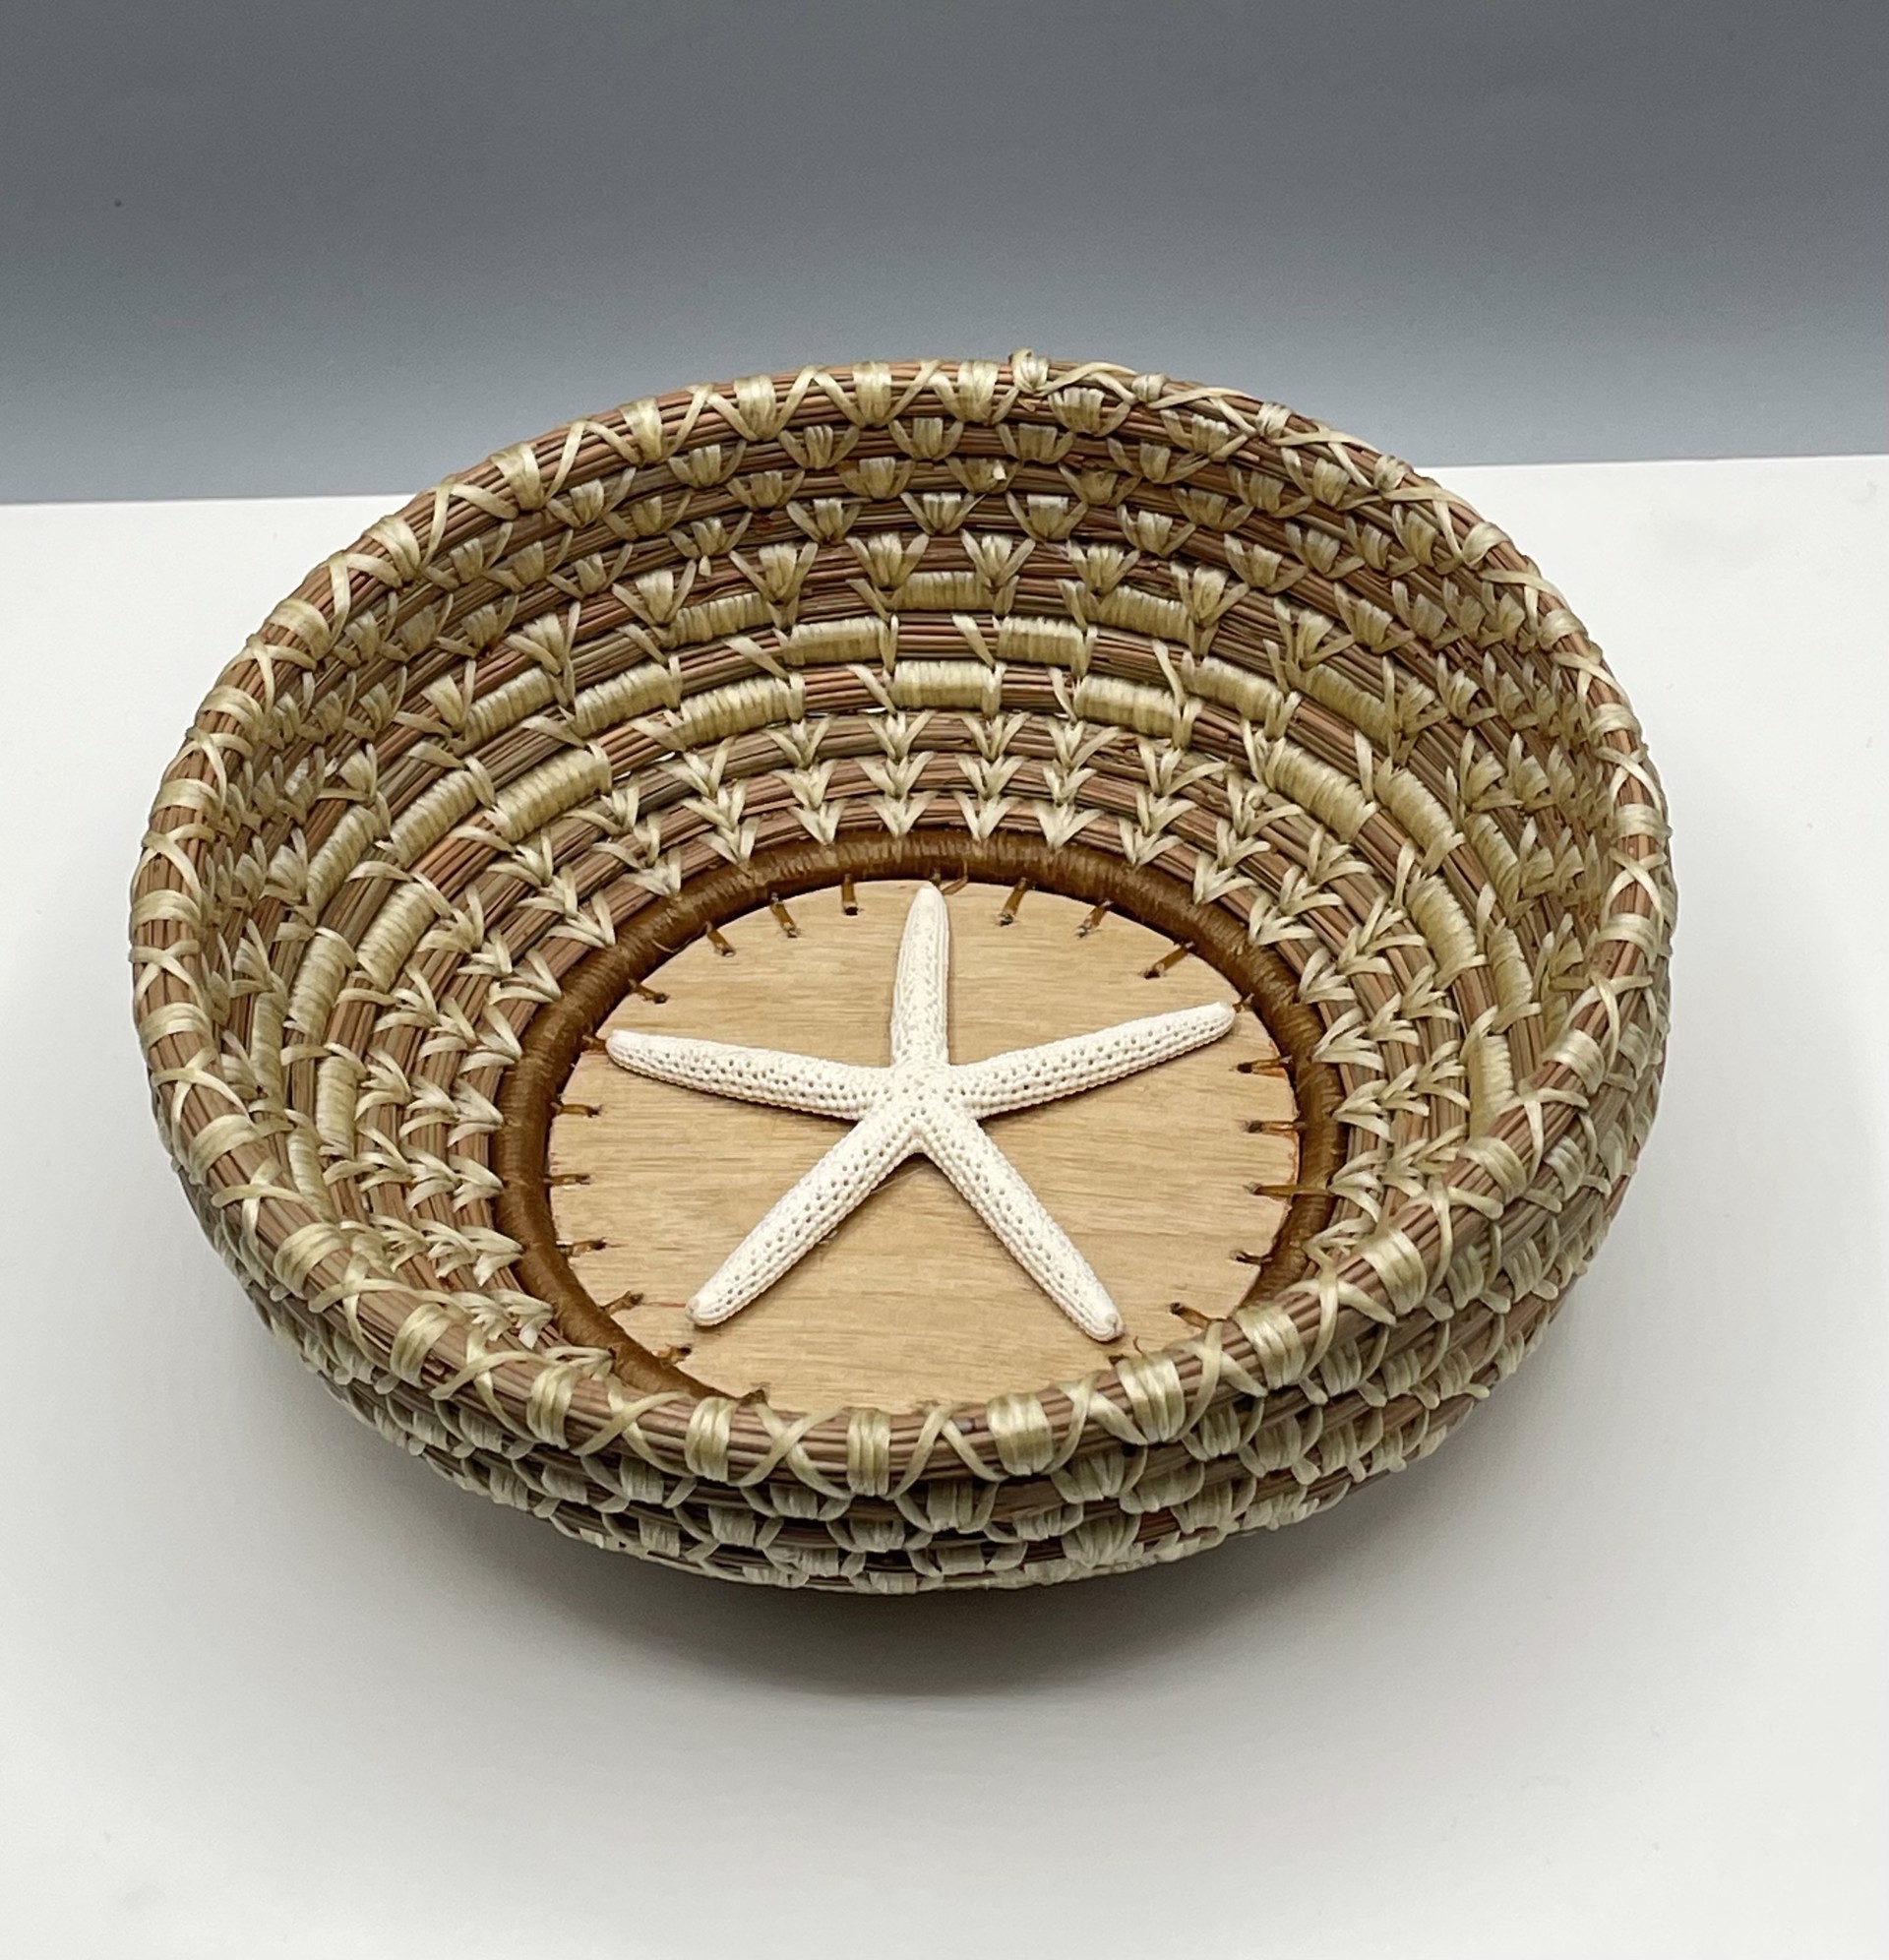 Star Fish Pine Needle Basket by Bud McLeod